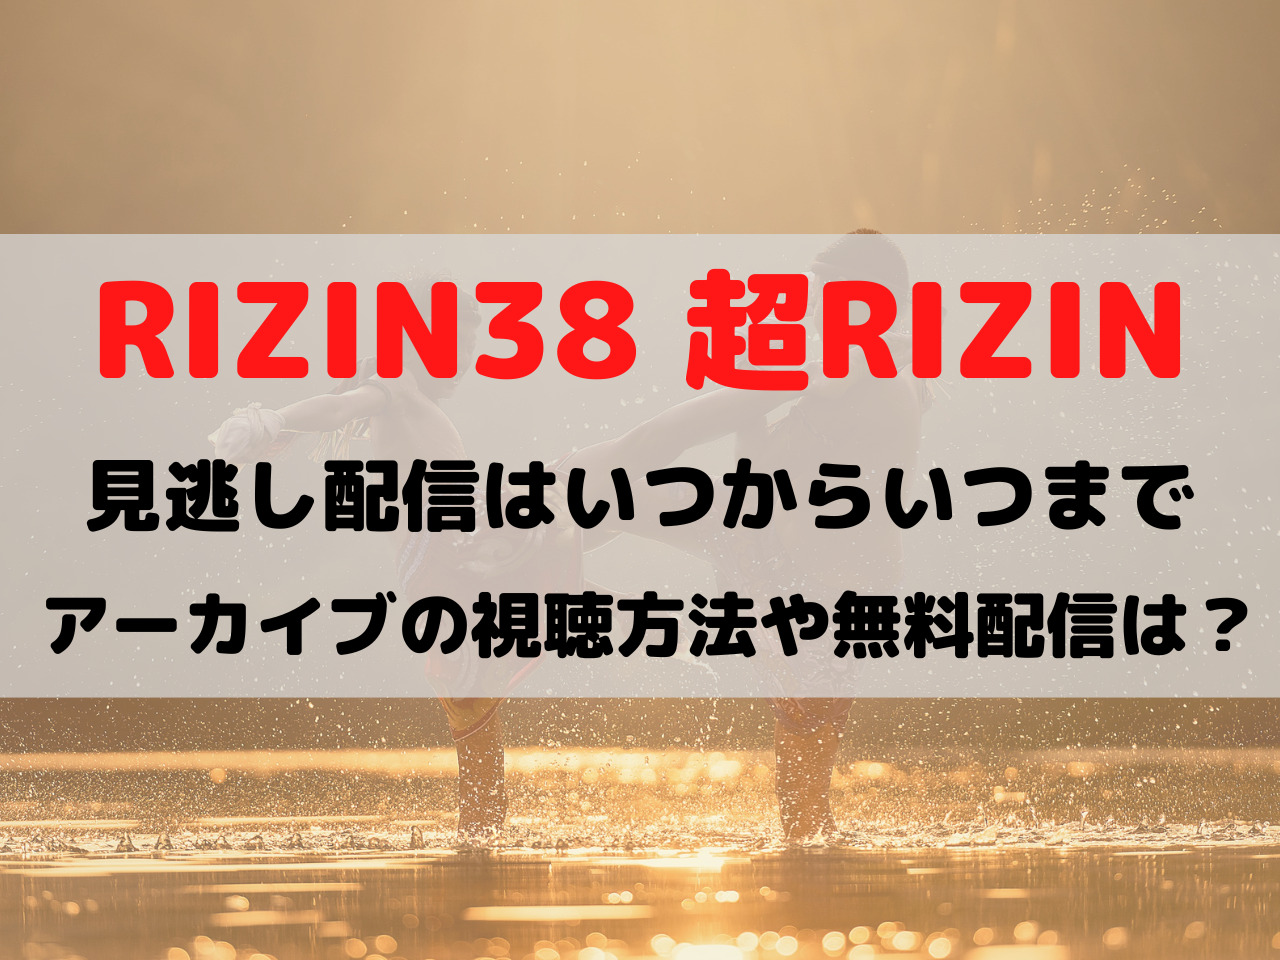 rizin38 超rizin(スーパーライジン) 見逃し